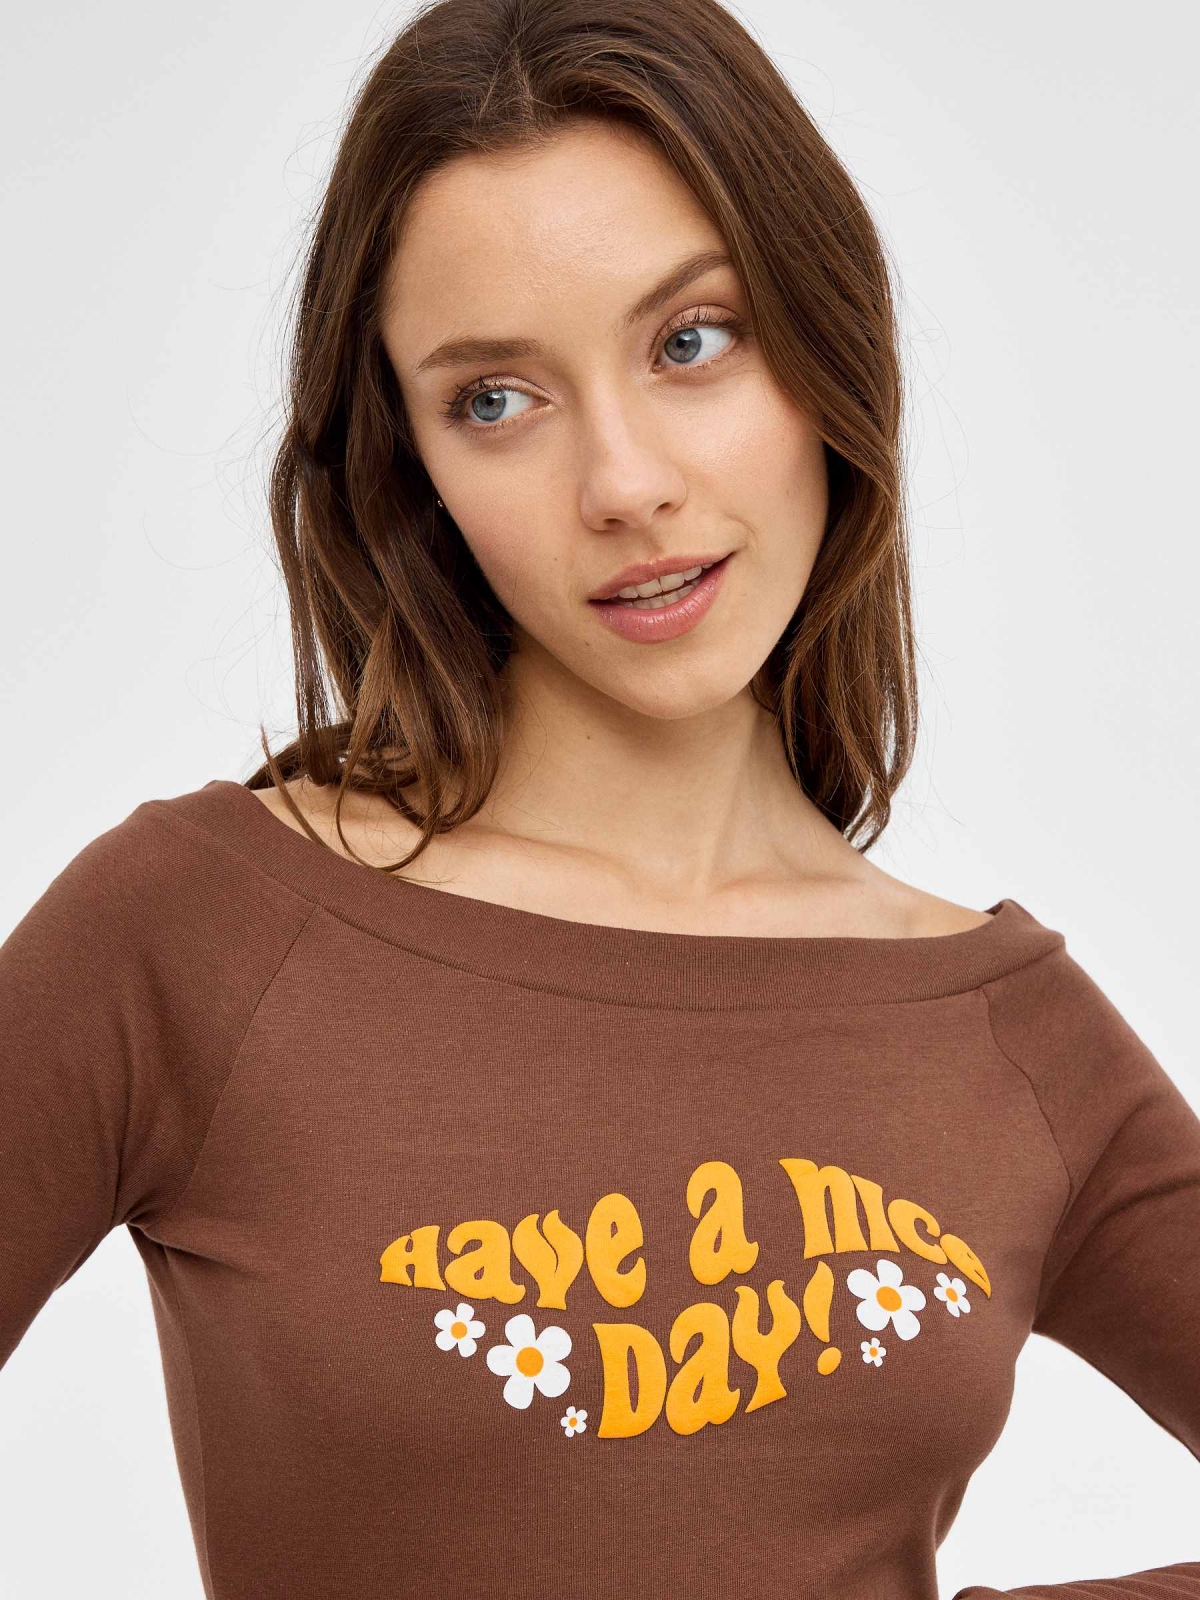 Camiseta print letras cuello de barco chocolate vista detalle